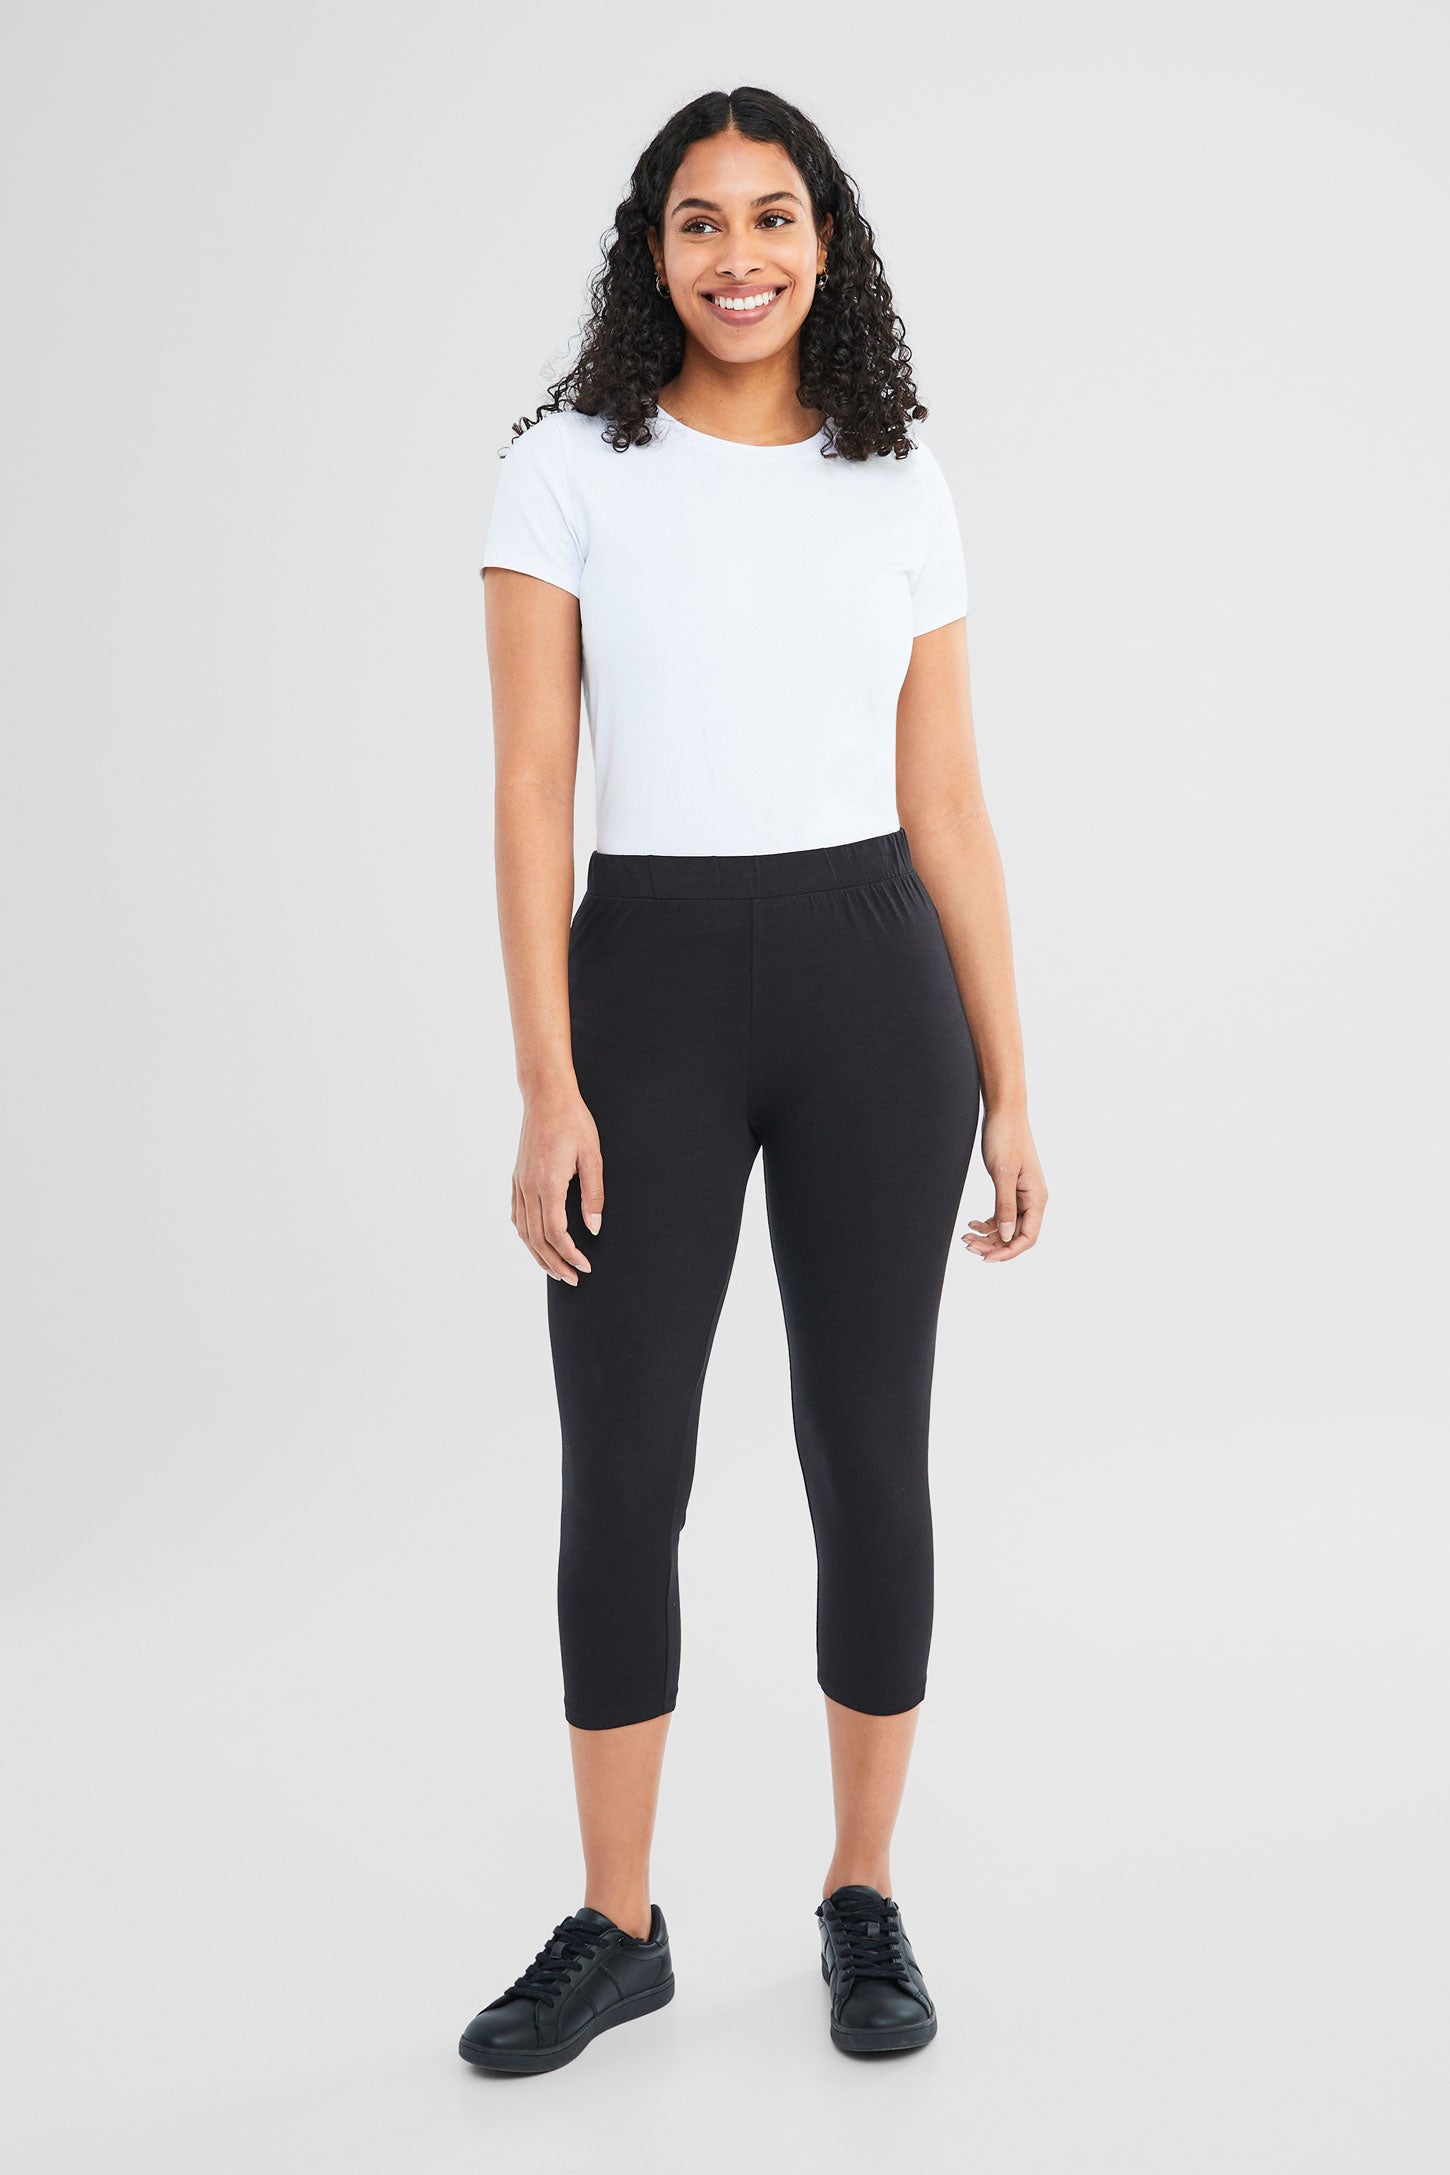 Tanya-B Women's Black Three-Quarter Legging Yoga Pants, Size (M)